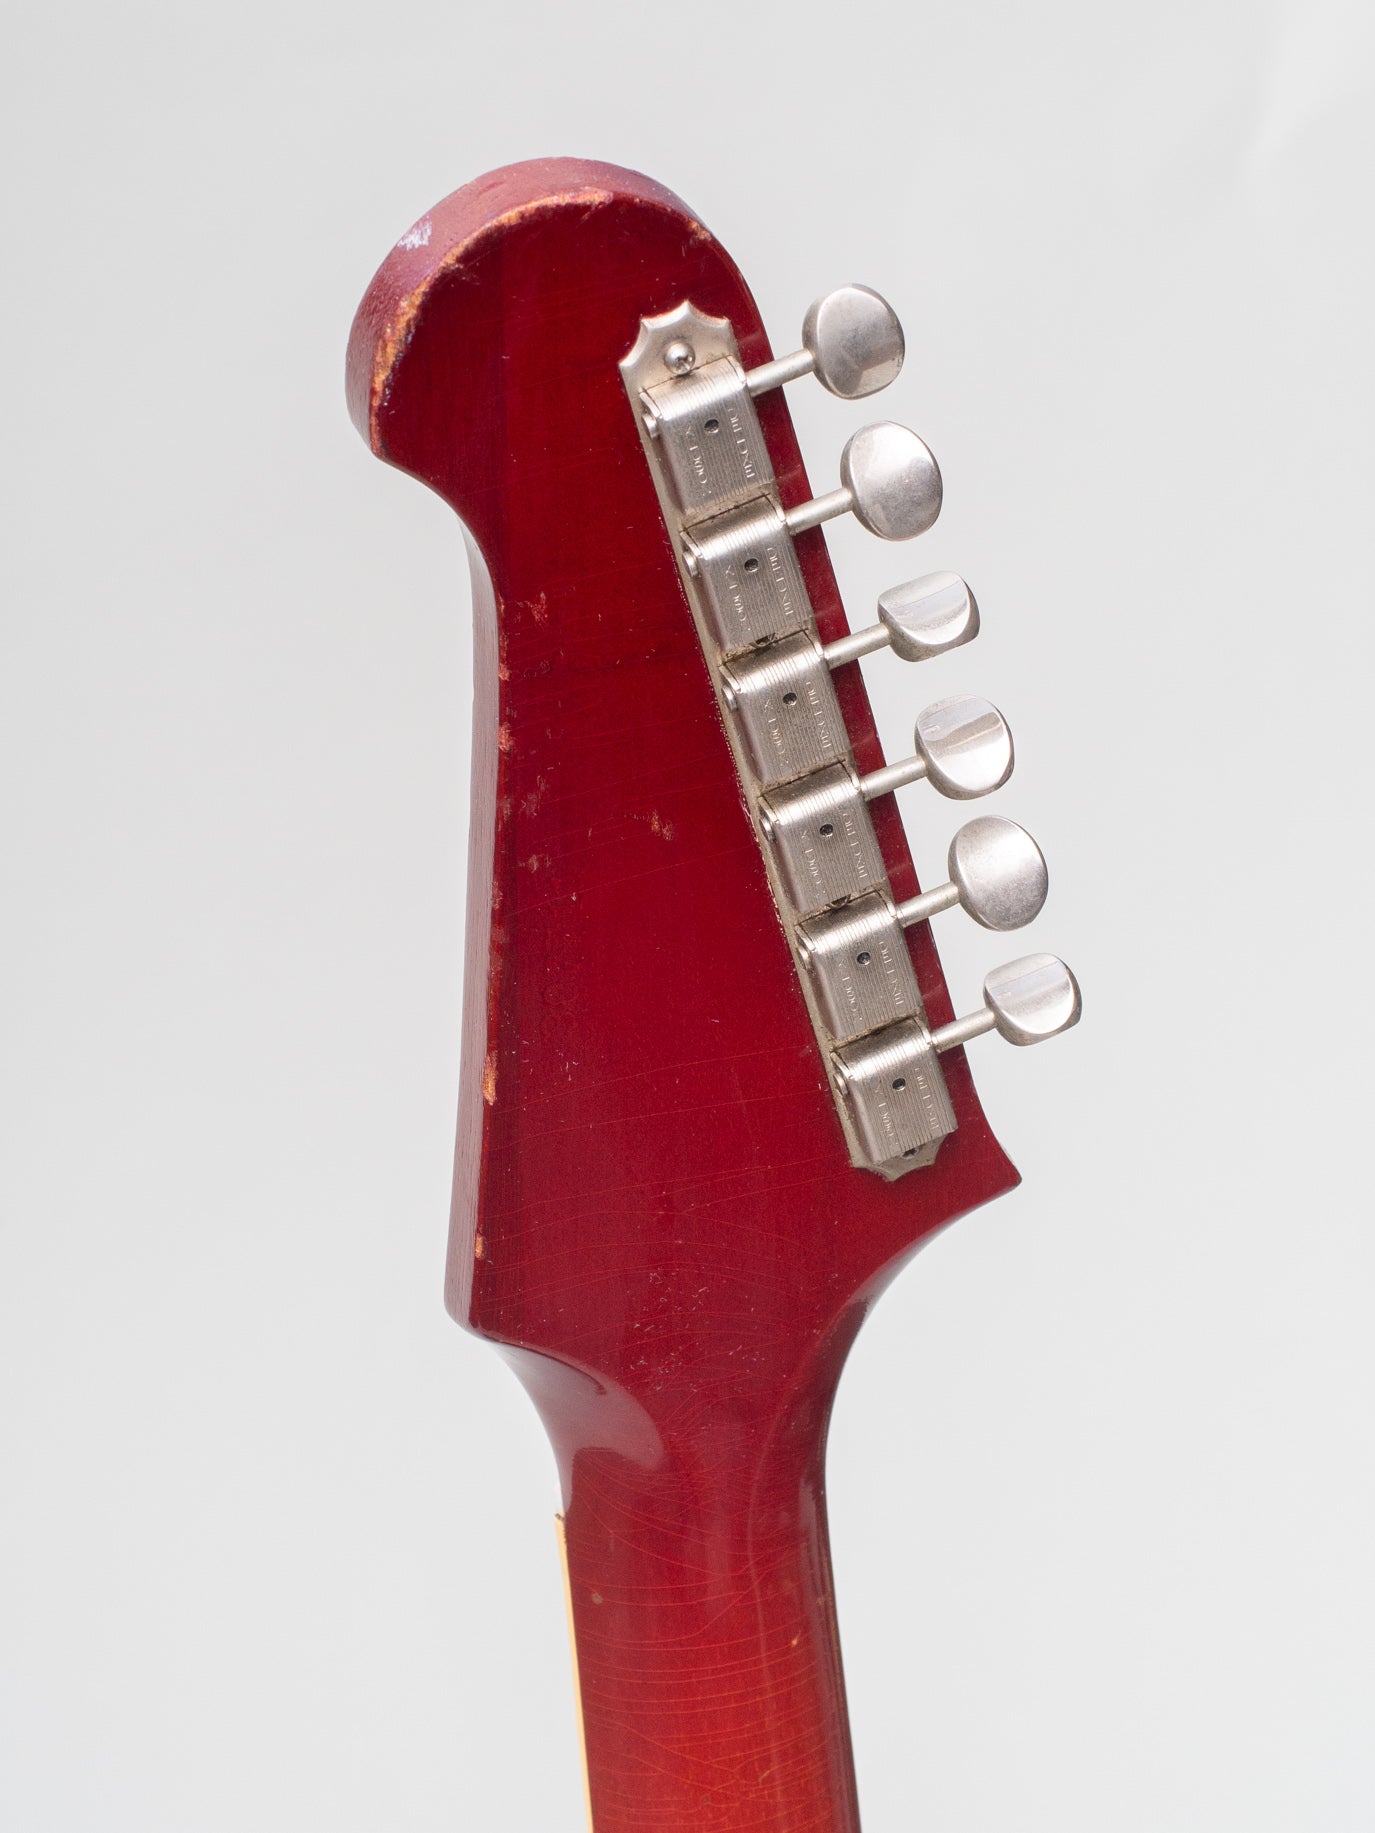 1965 Gibson Trini Lopez Custom